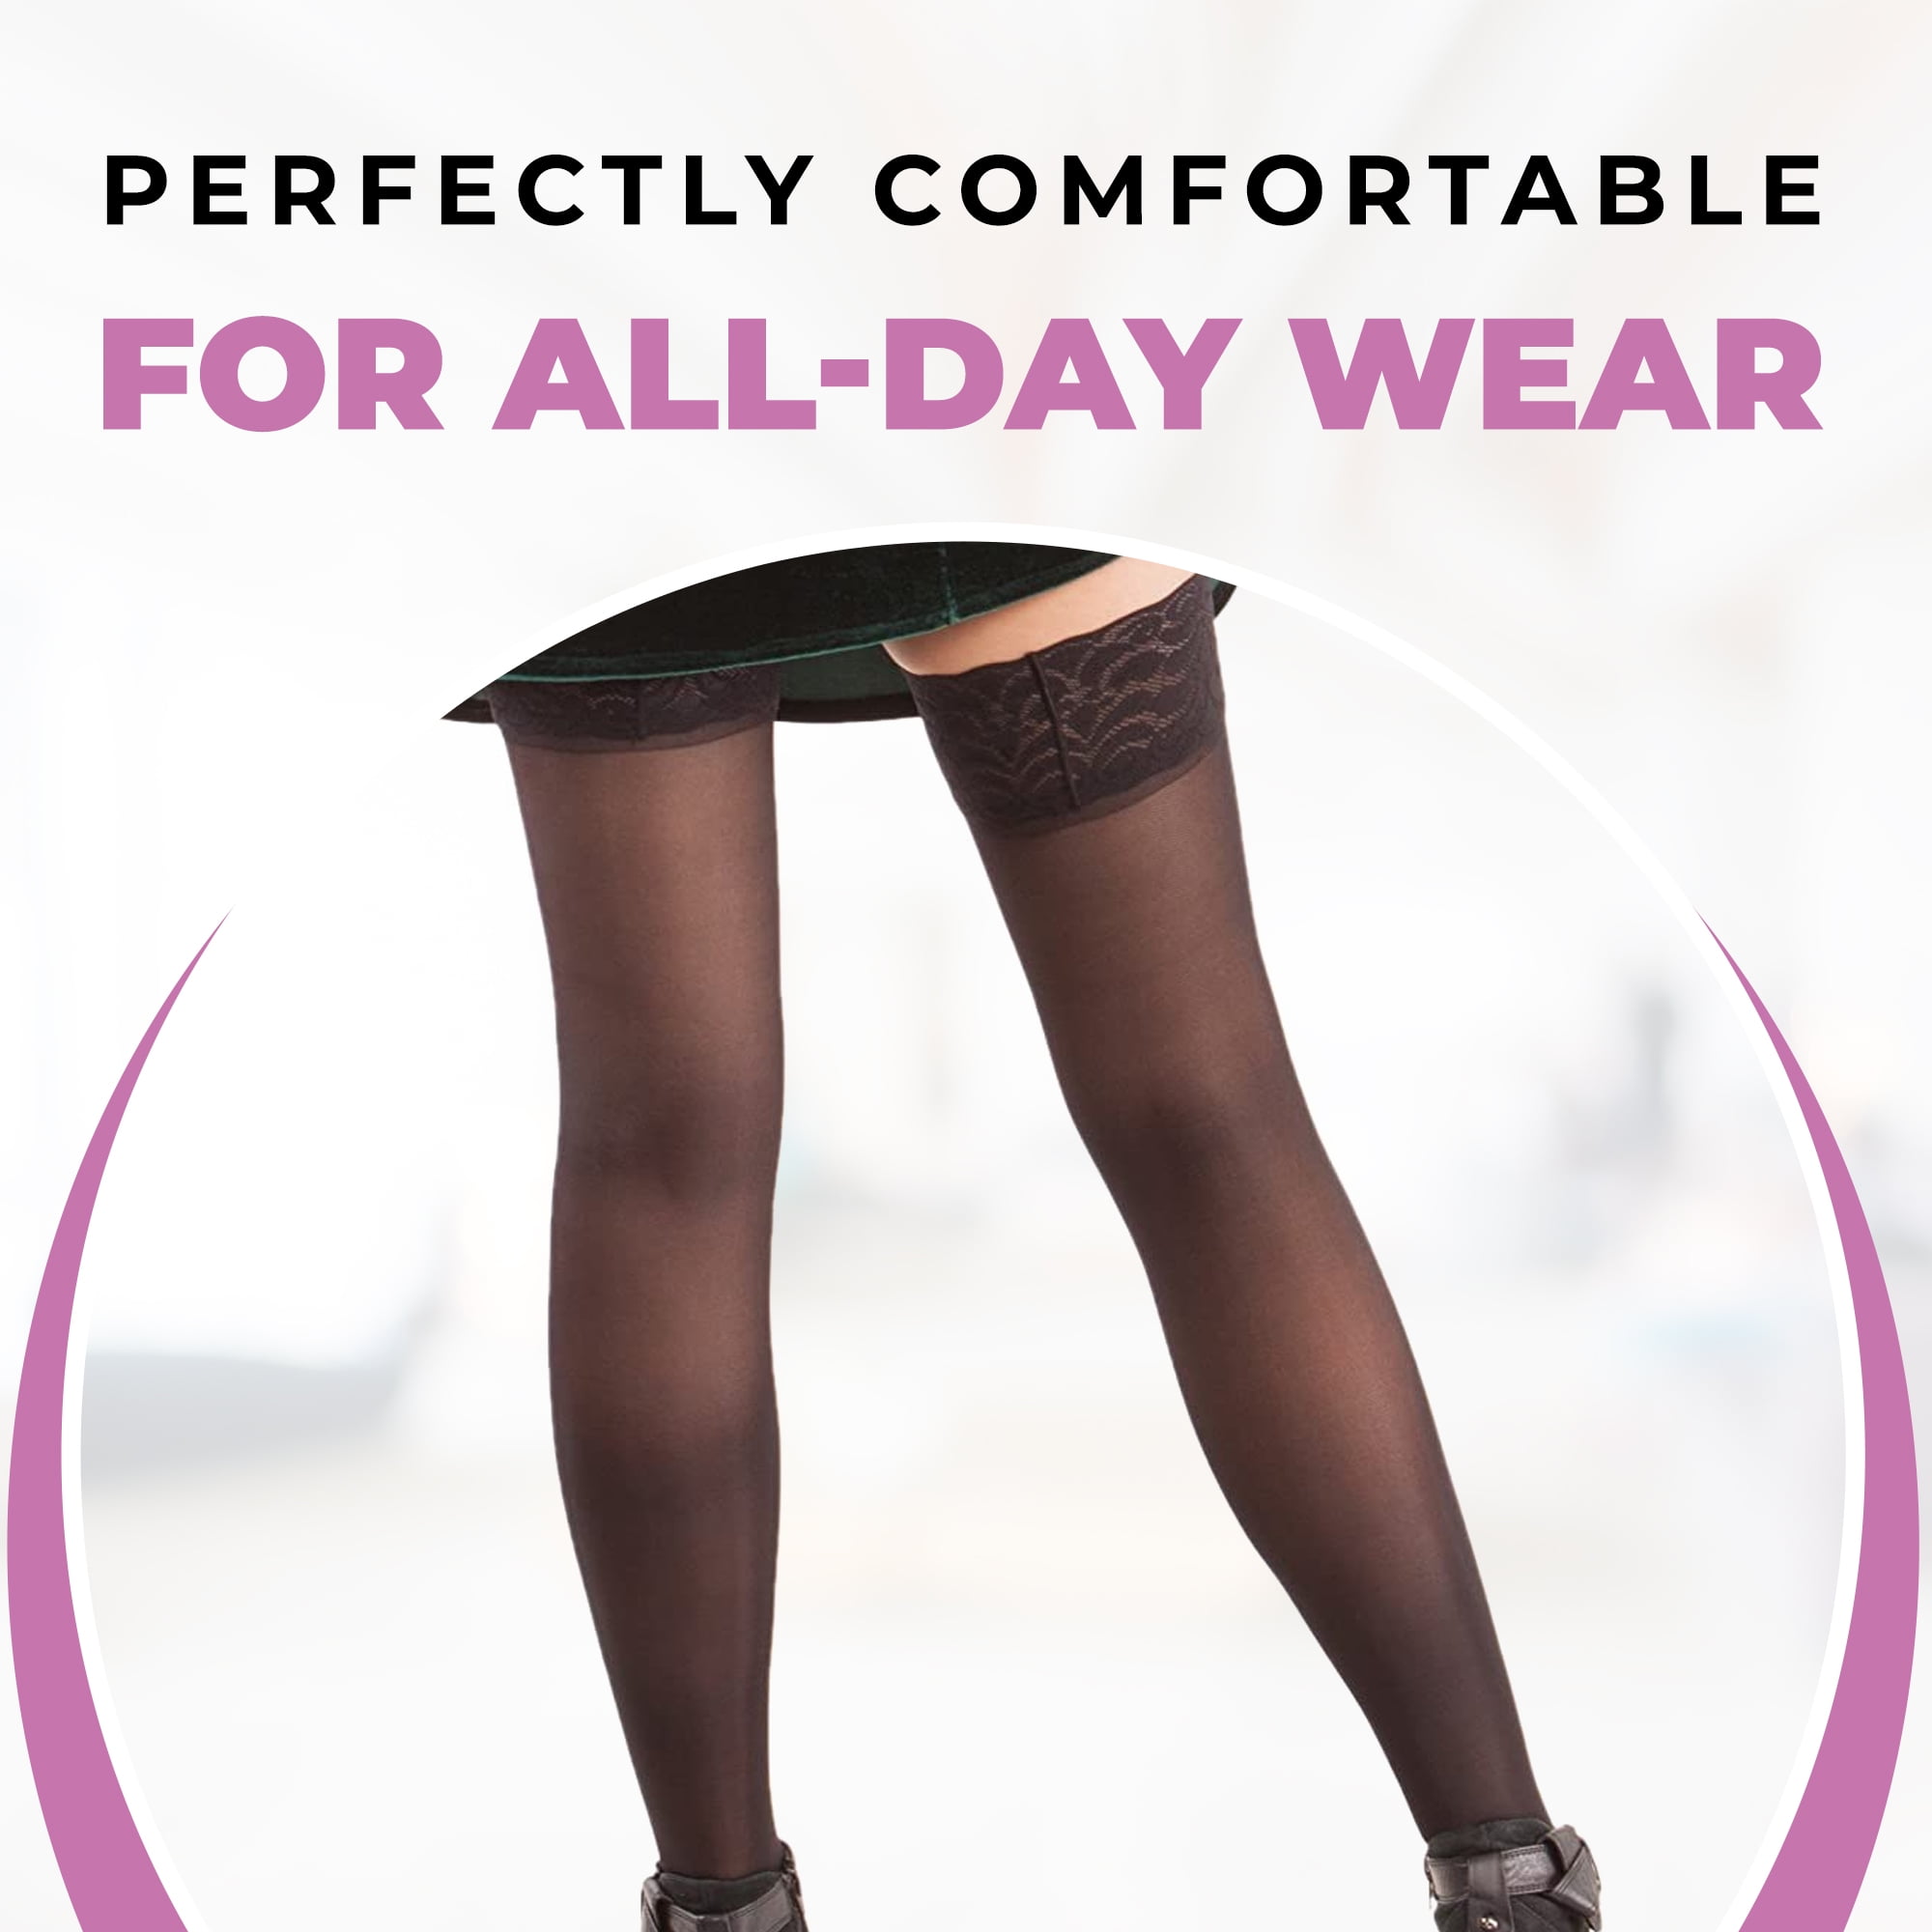 ITA-MED Sheer Compression Socks for Women, 20-30 mmHg, Thigh High